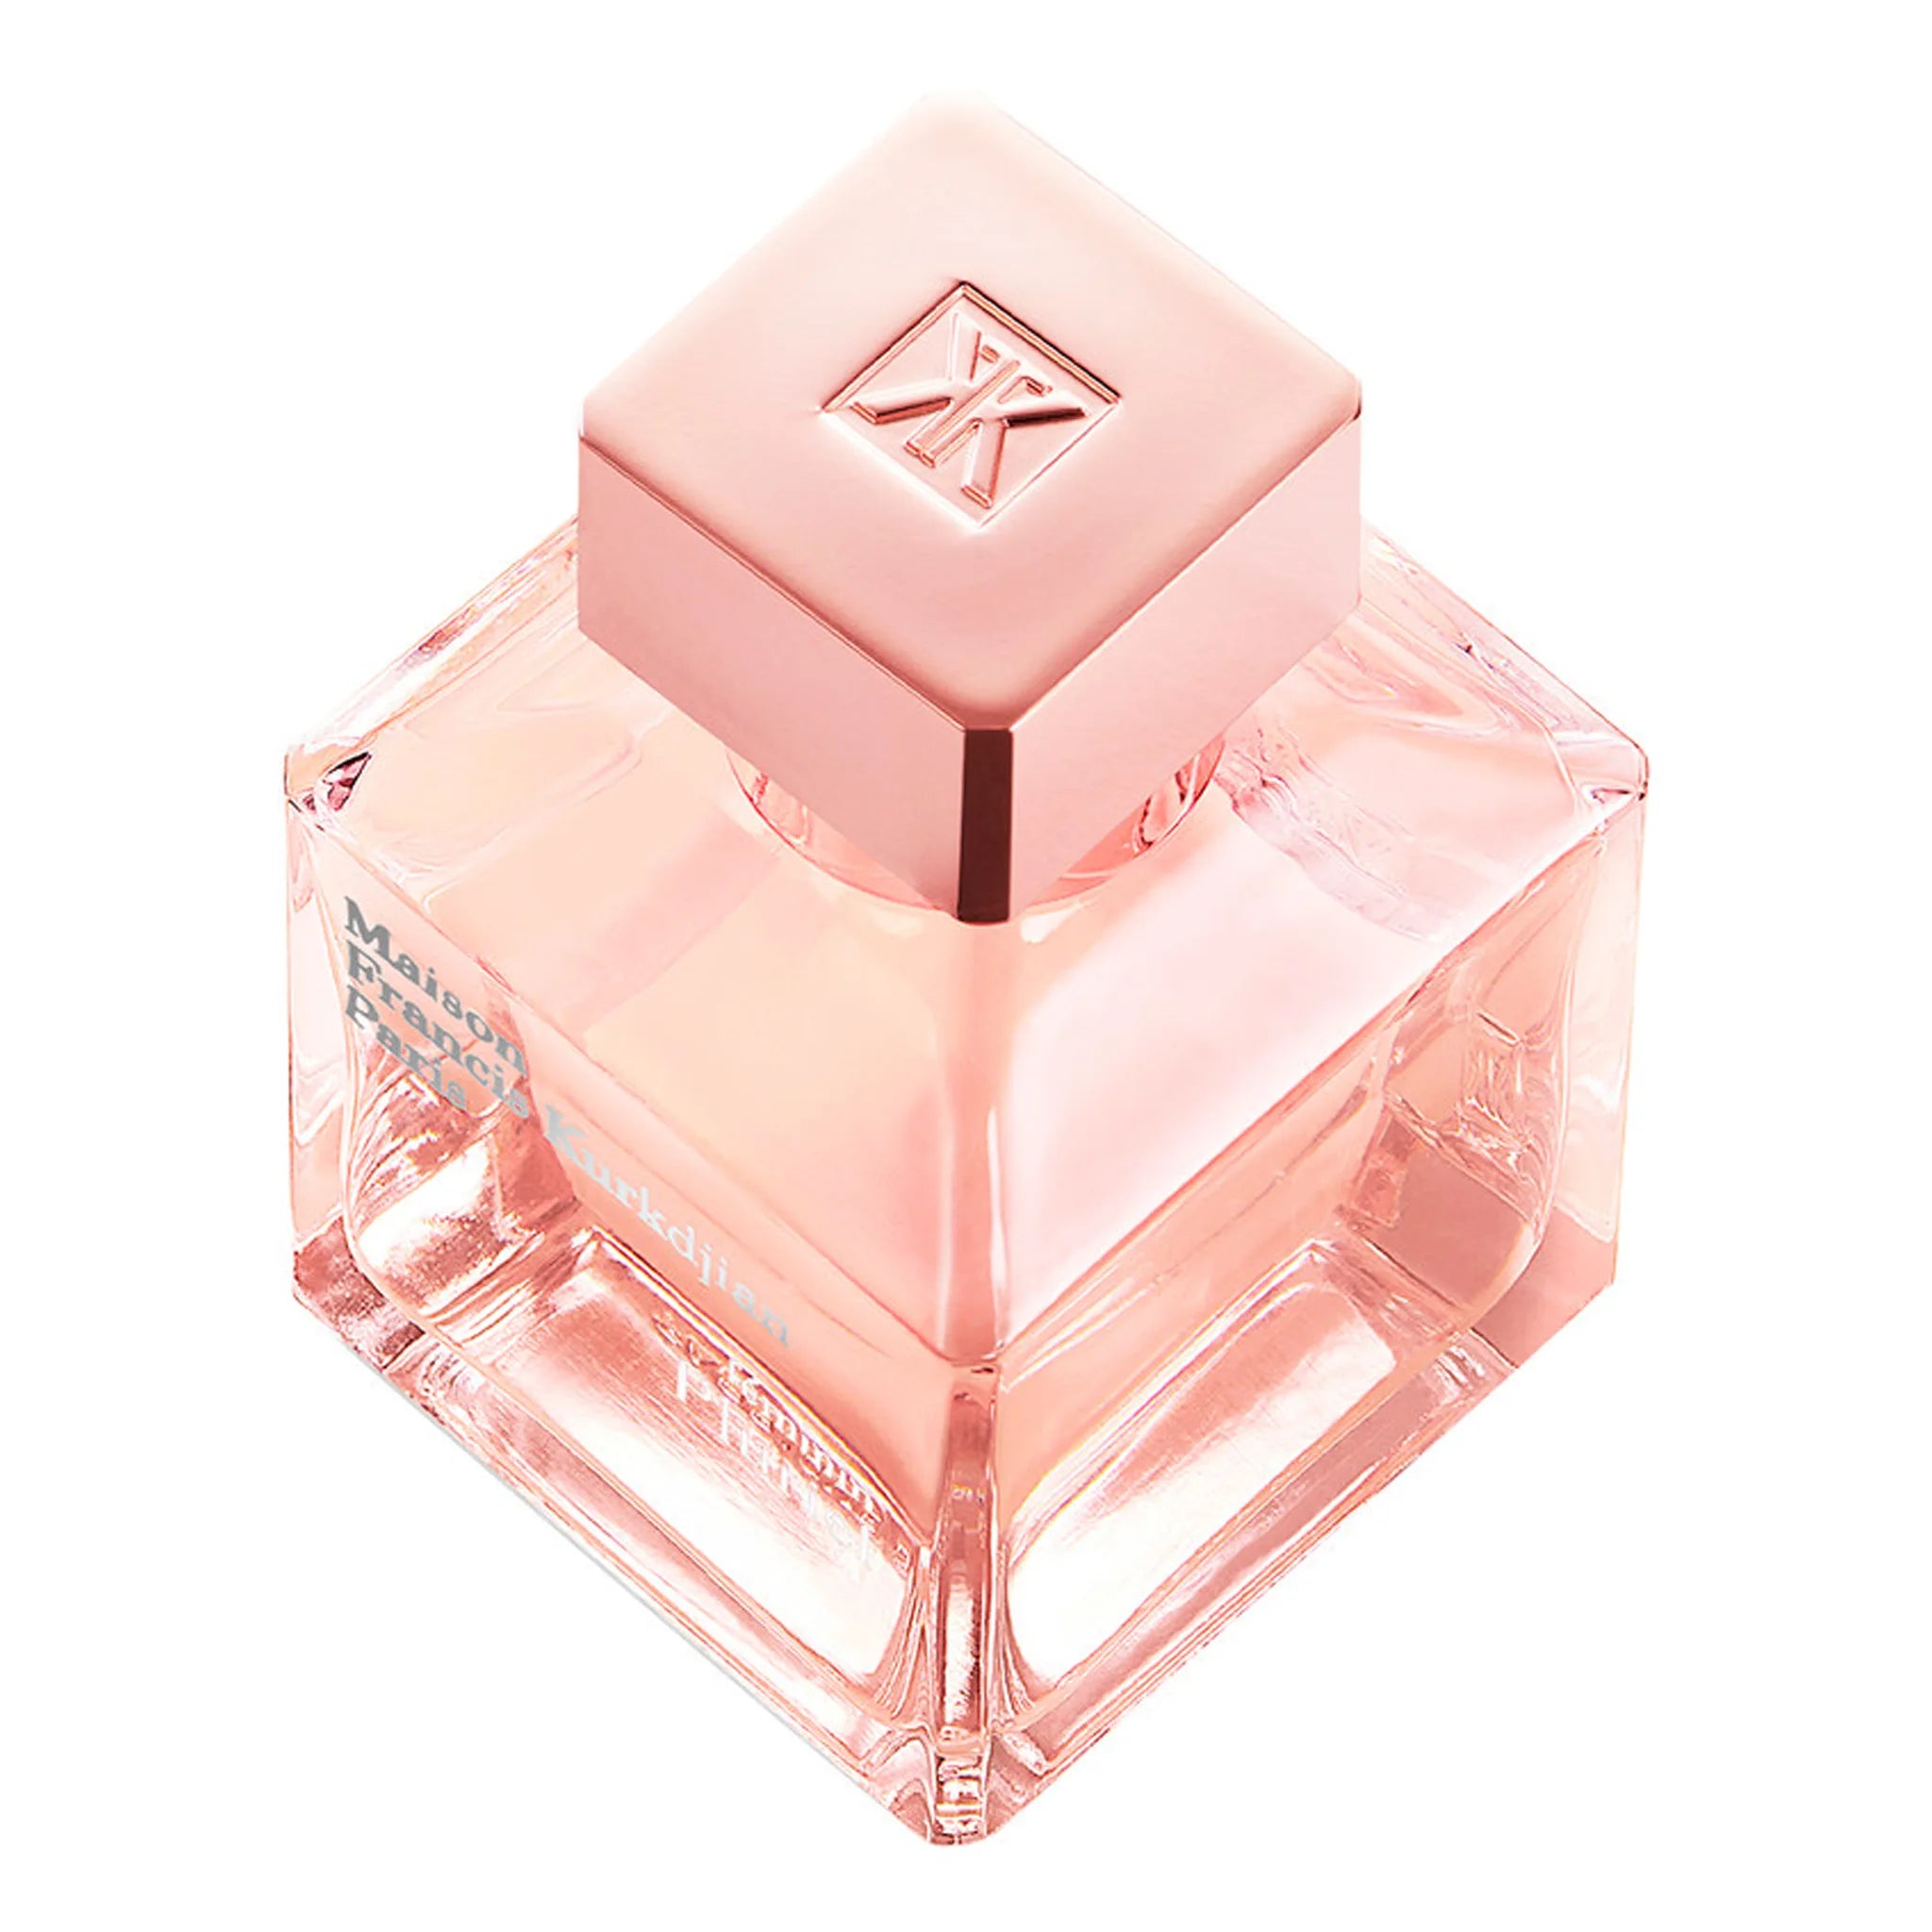 Top view of Maison Francis Kurkdjian Féminin Pluriel Eau De Parfum 70ml